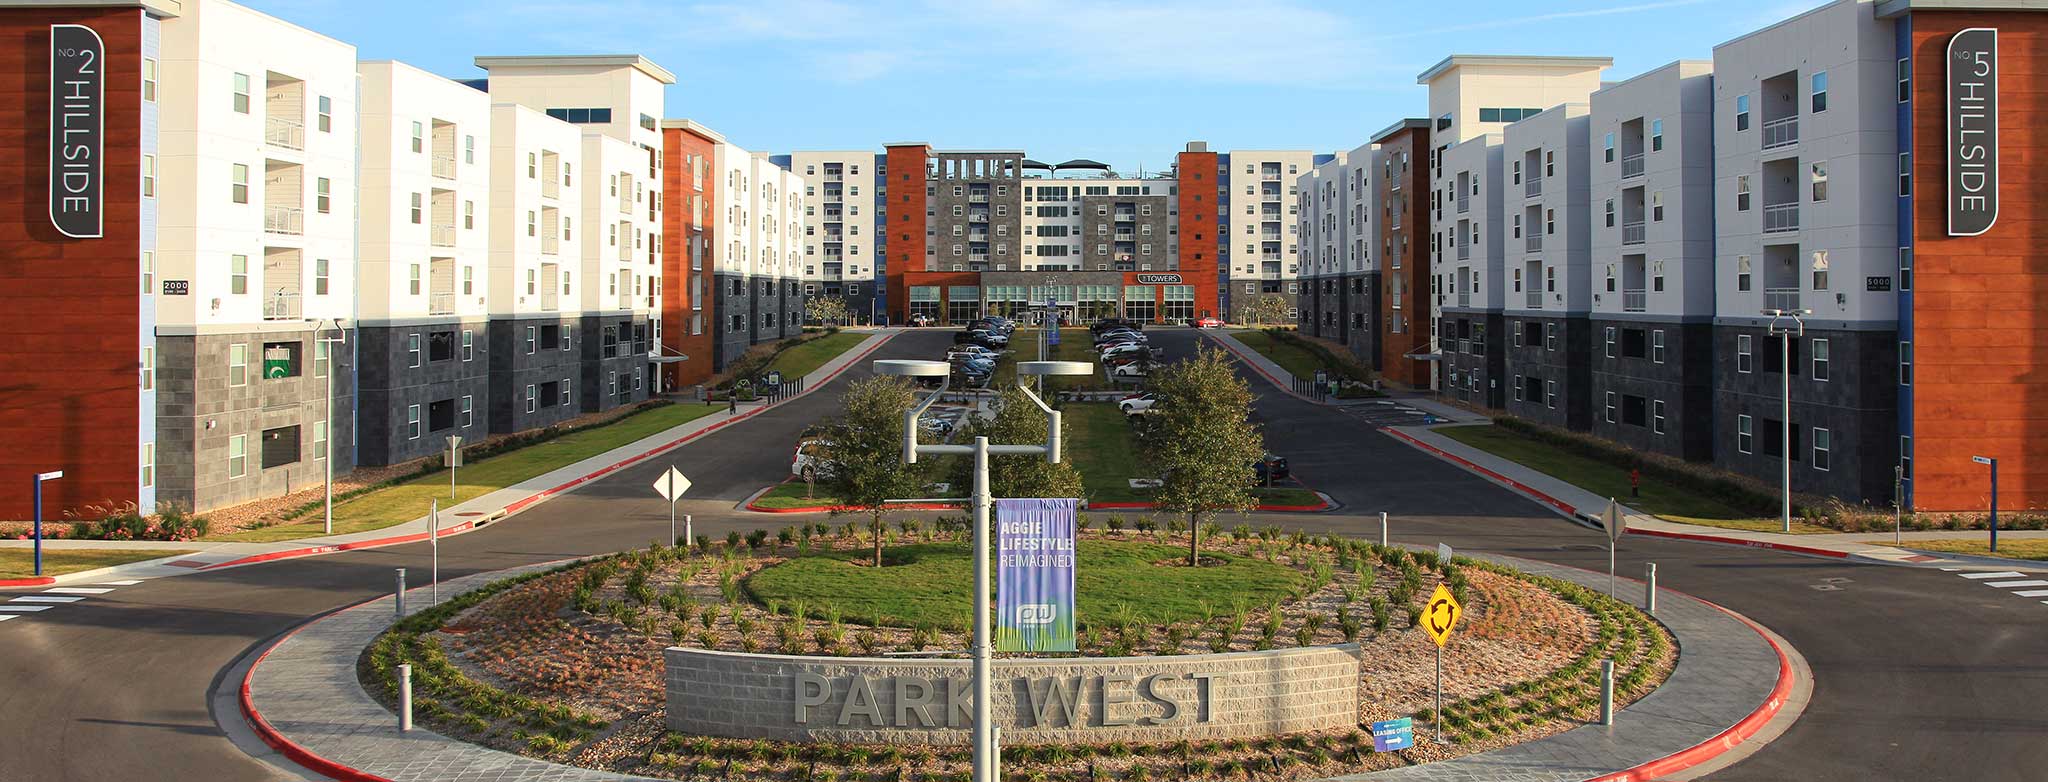 TAMU Park West Student Apartments